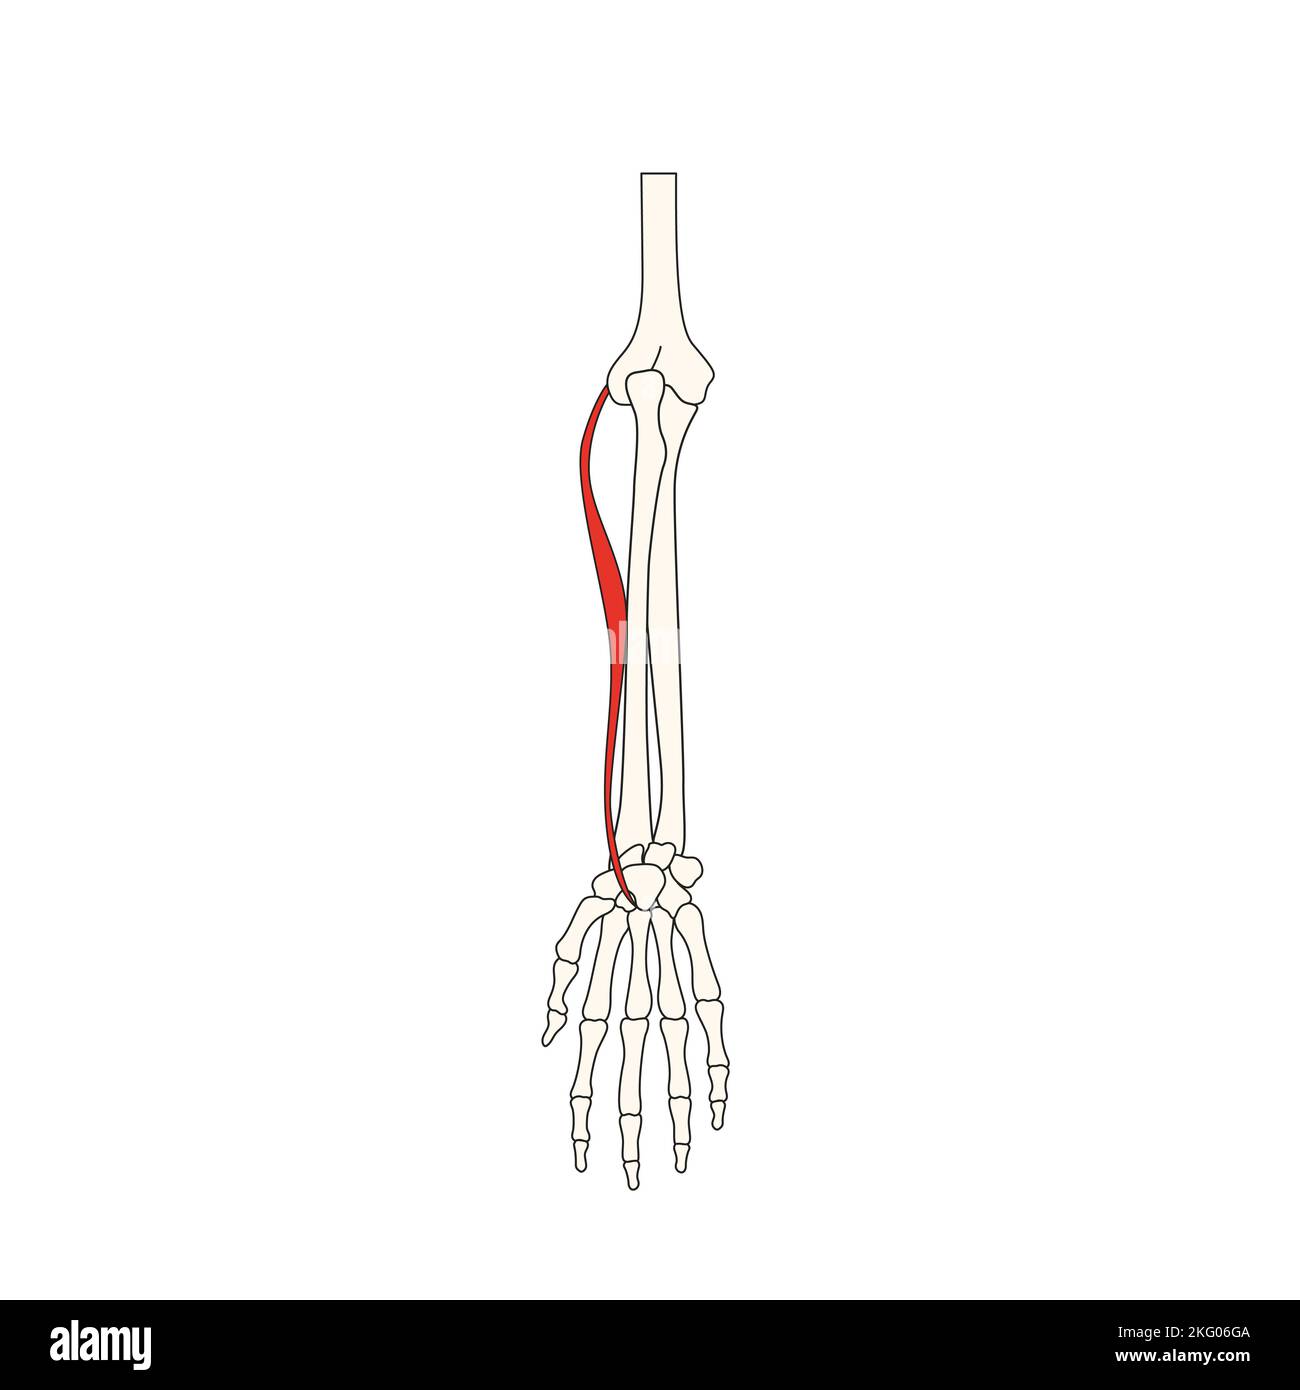 human anatomy drawing muscle extensor carpi radialis brevis Stock Photo